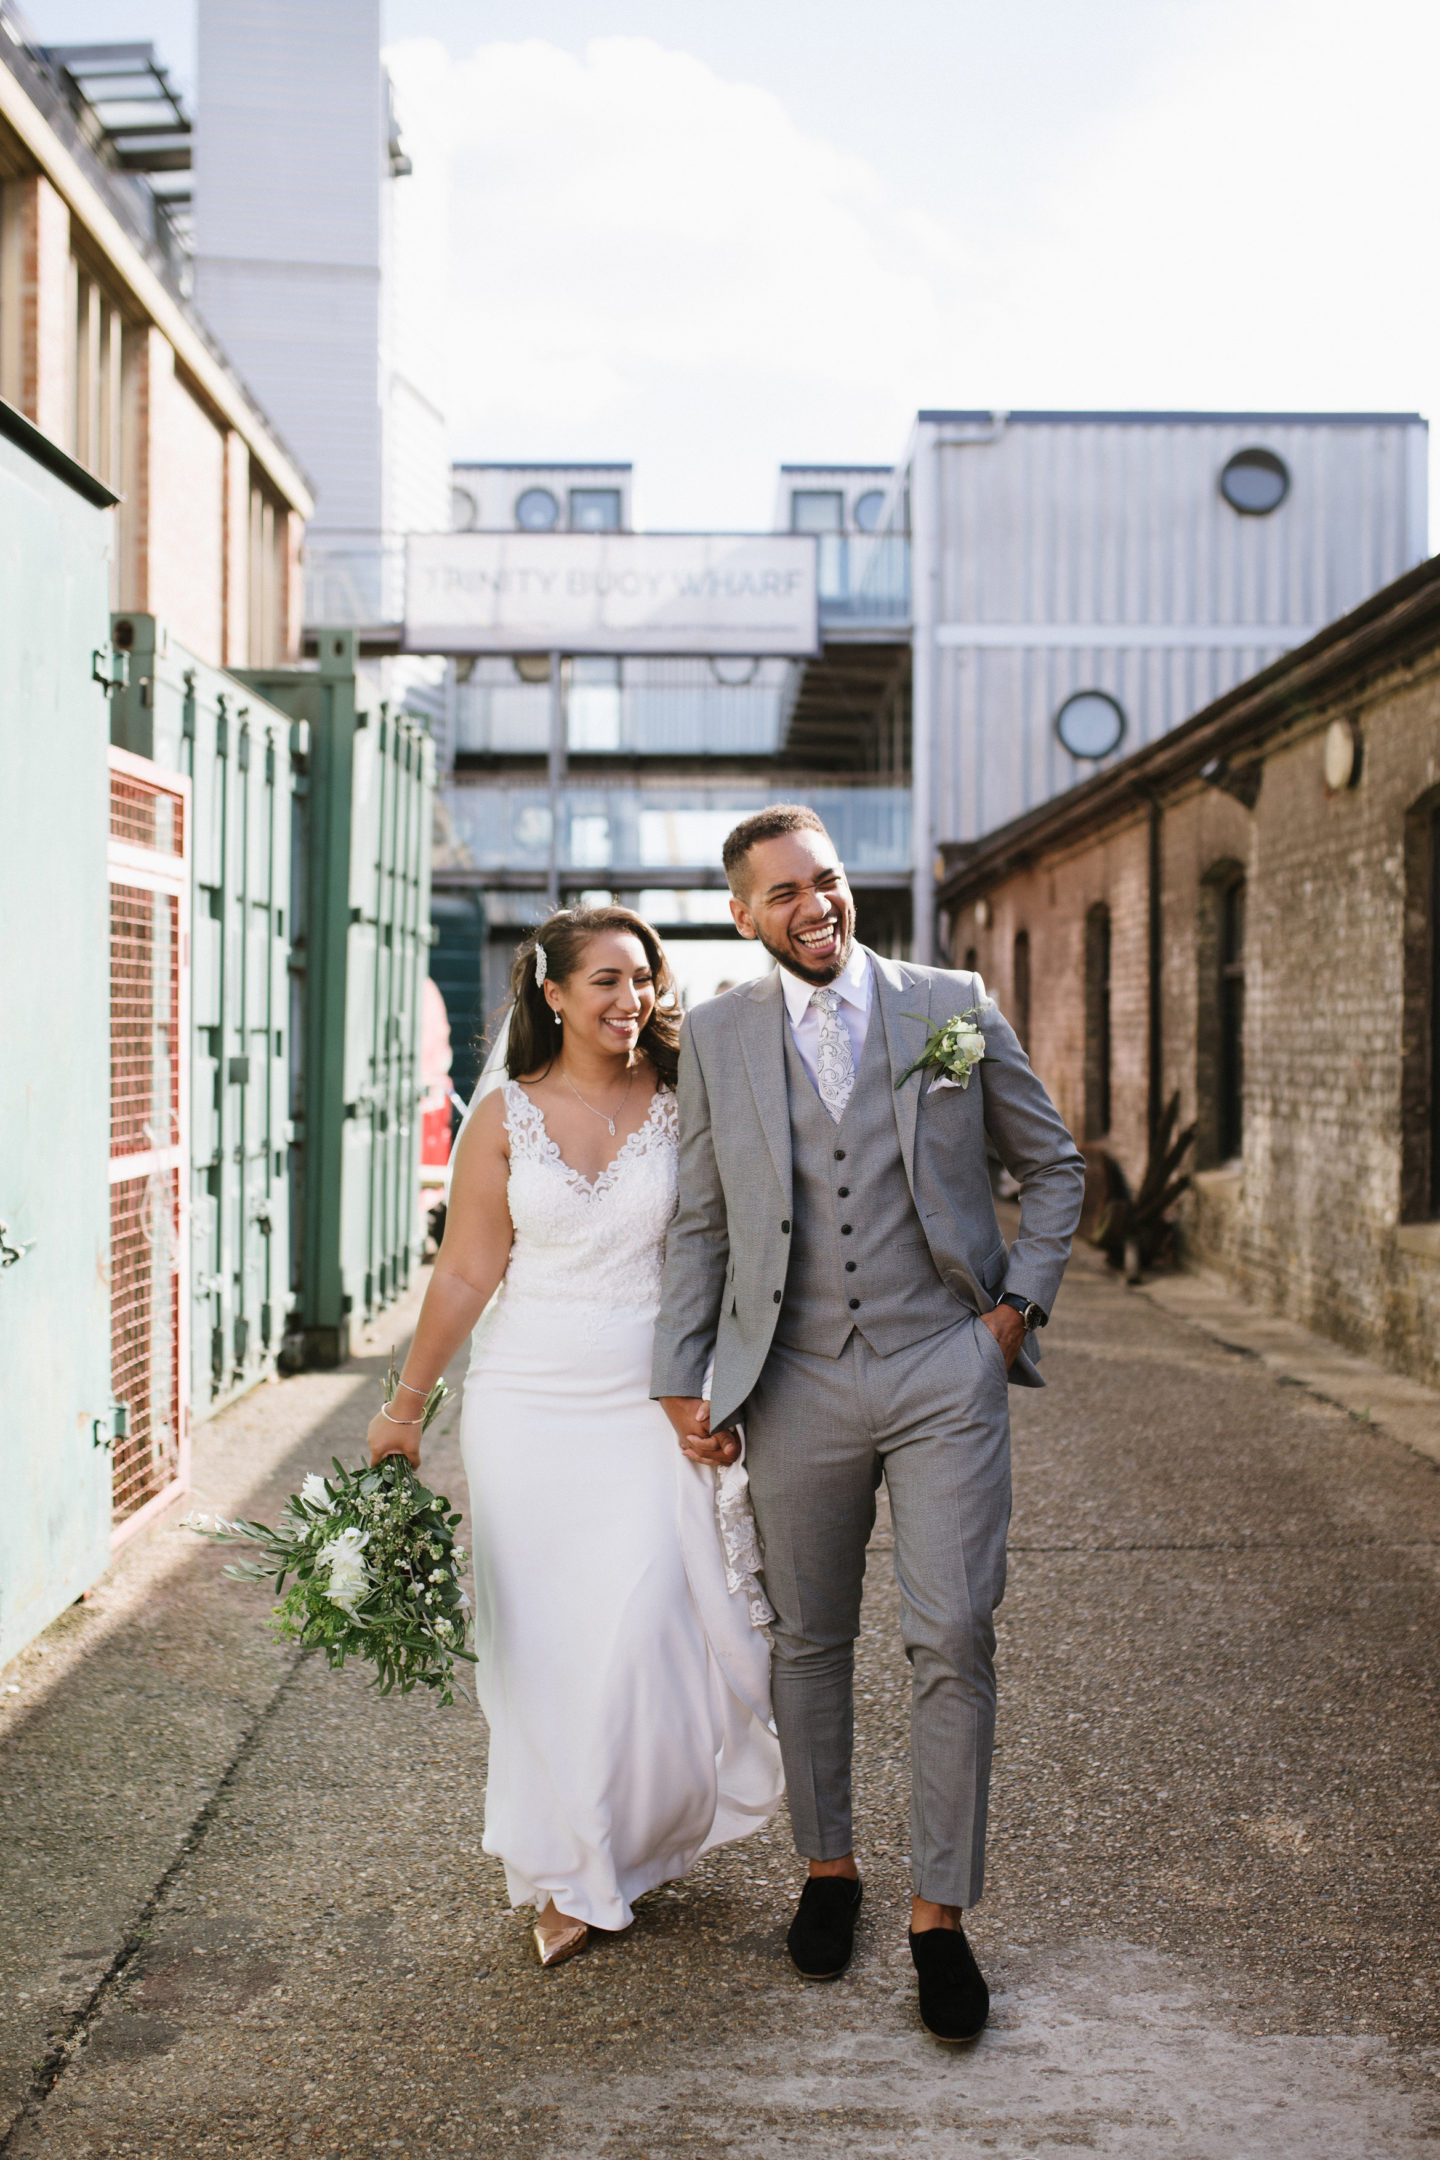 A modern, industrial wedding at Trinity Buoy Wharf warehouse in East London